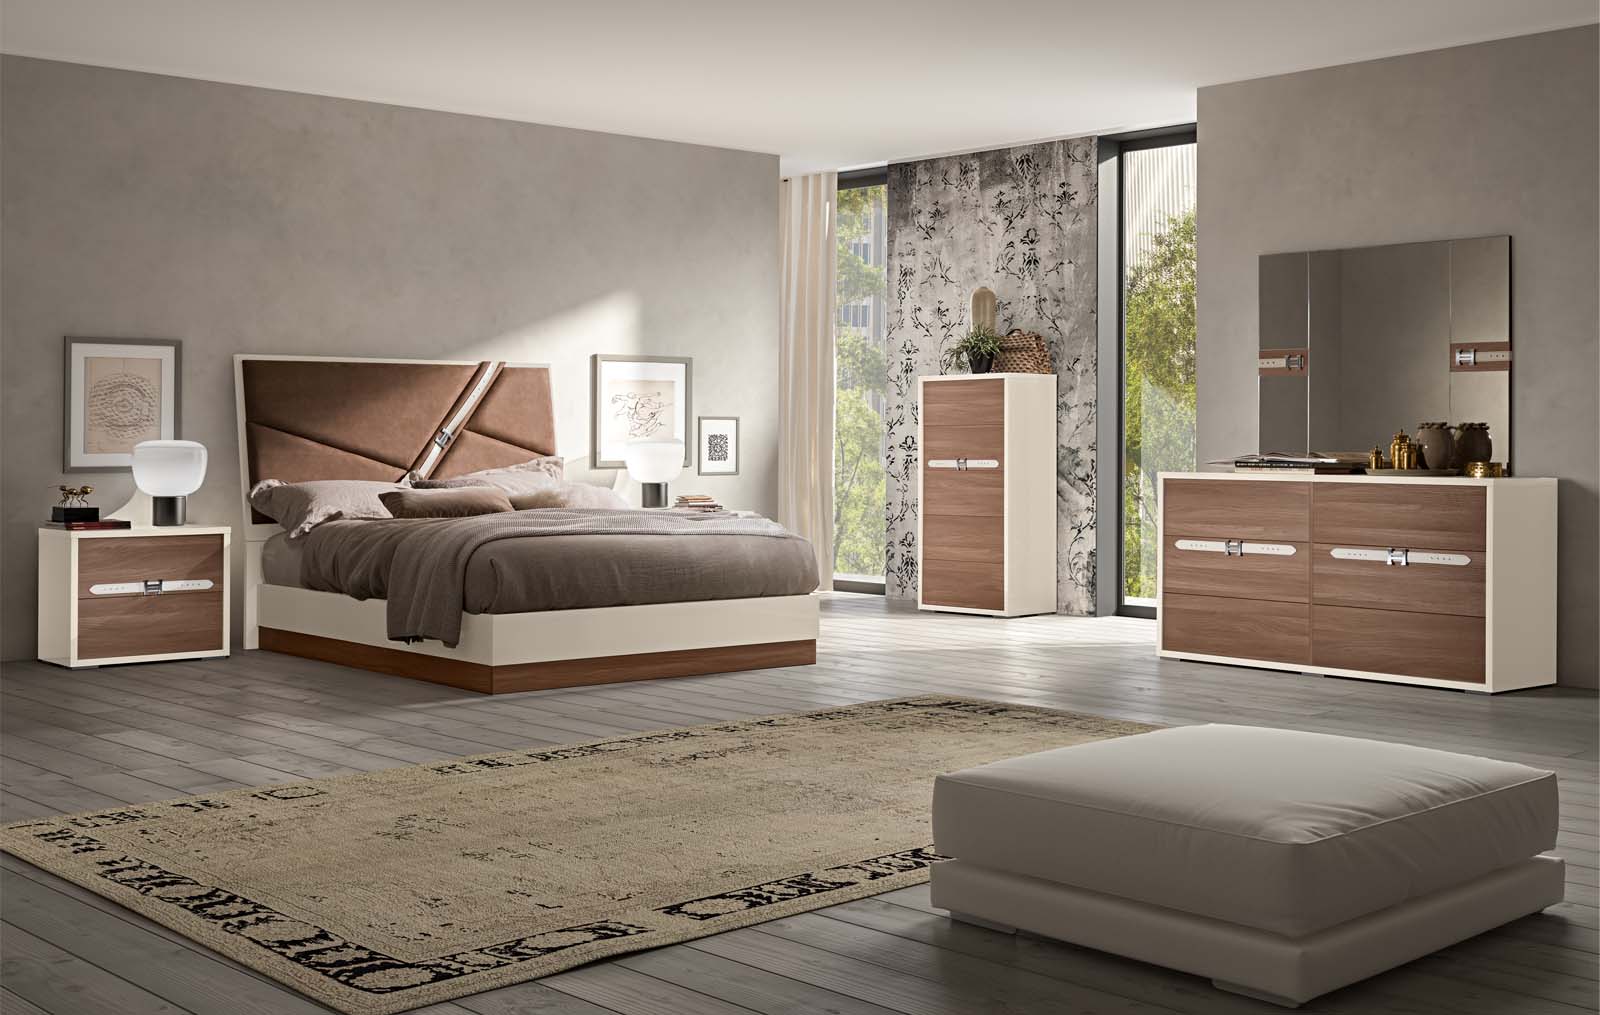 designer italian bedroom furniture nella vettra